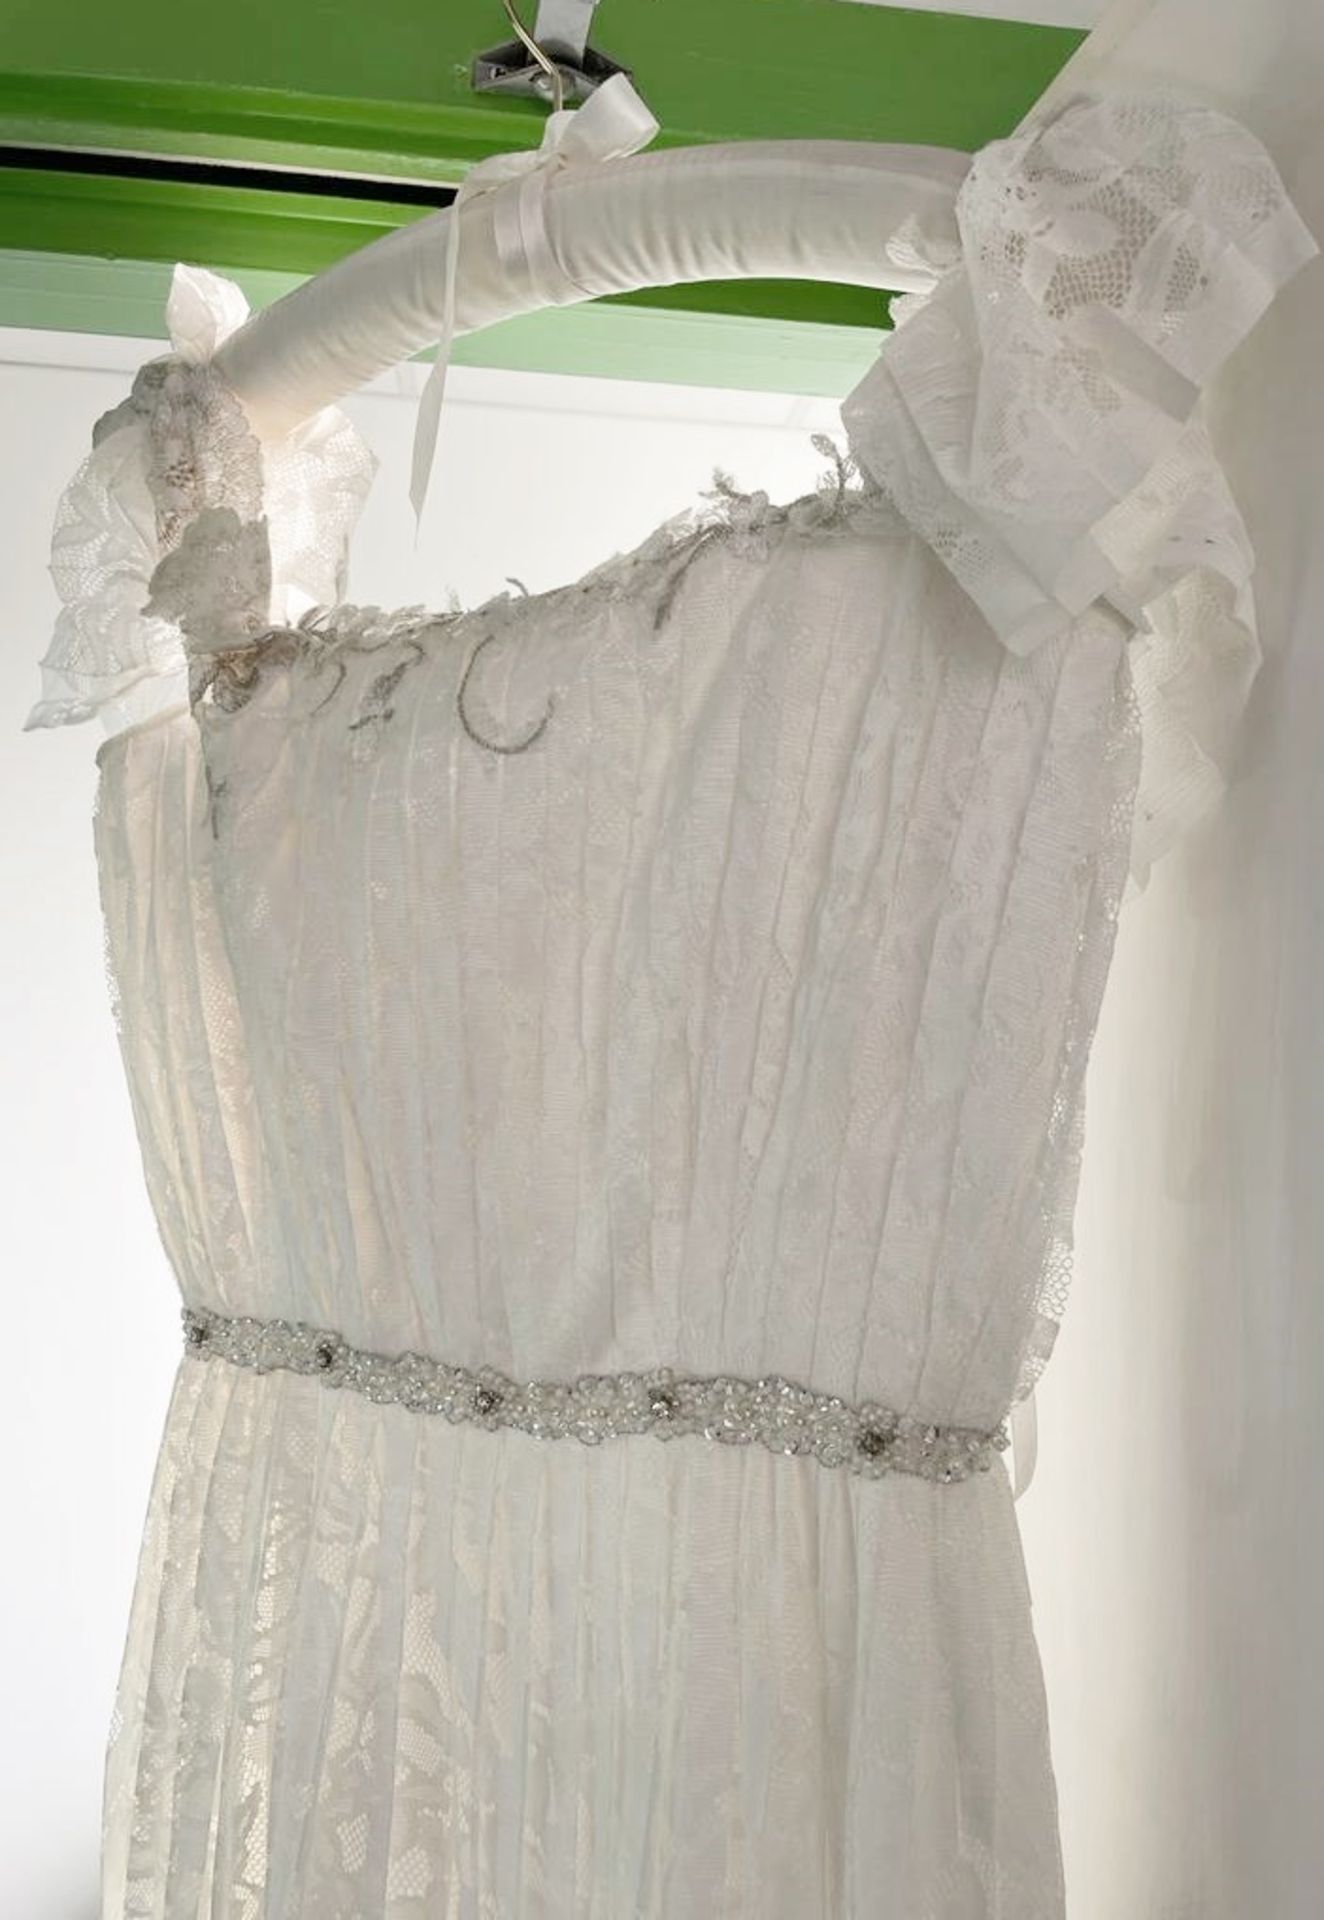 1 x DAVID FIELDEN Sposa Designer Wedding Dress Bridal Gown - Size: UK 14 - Original RRP £2,340 - Image 2 of 10